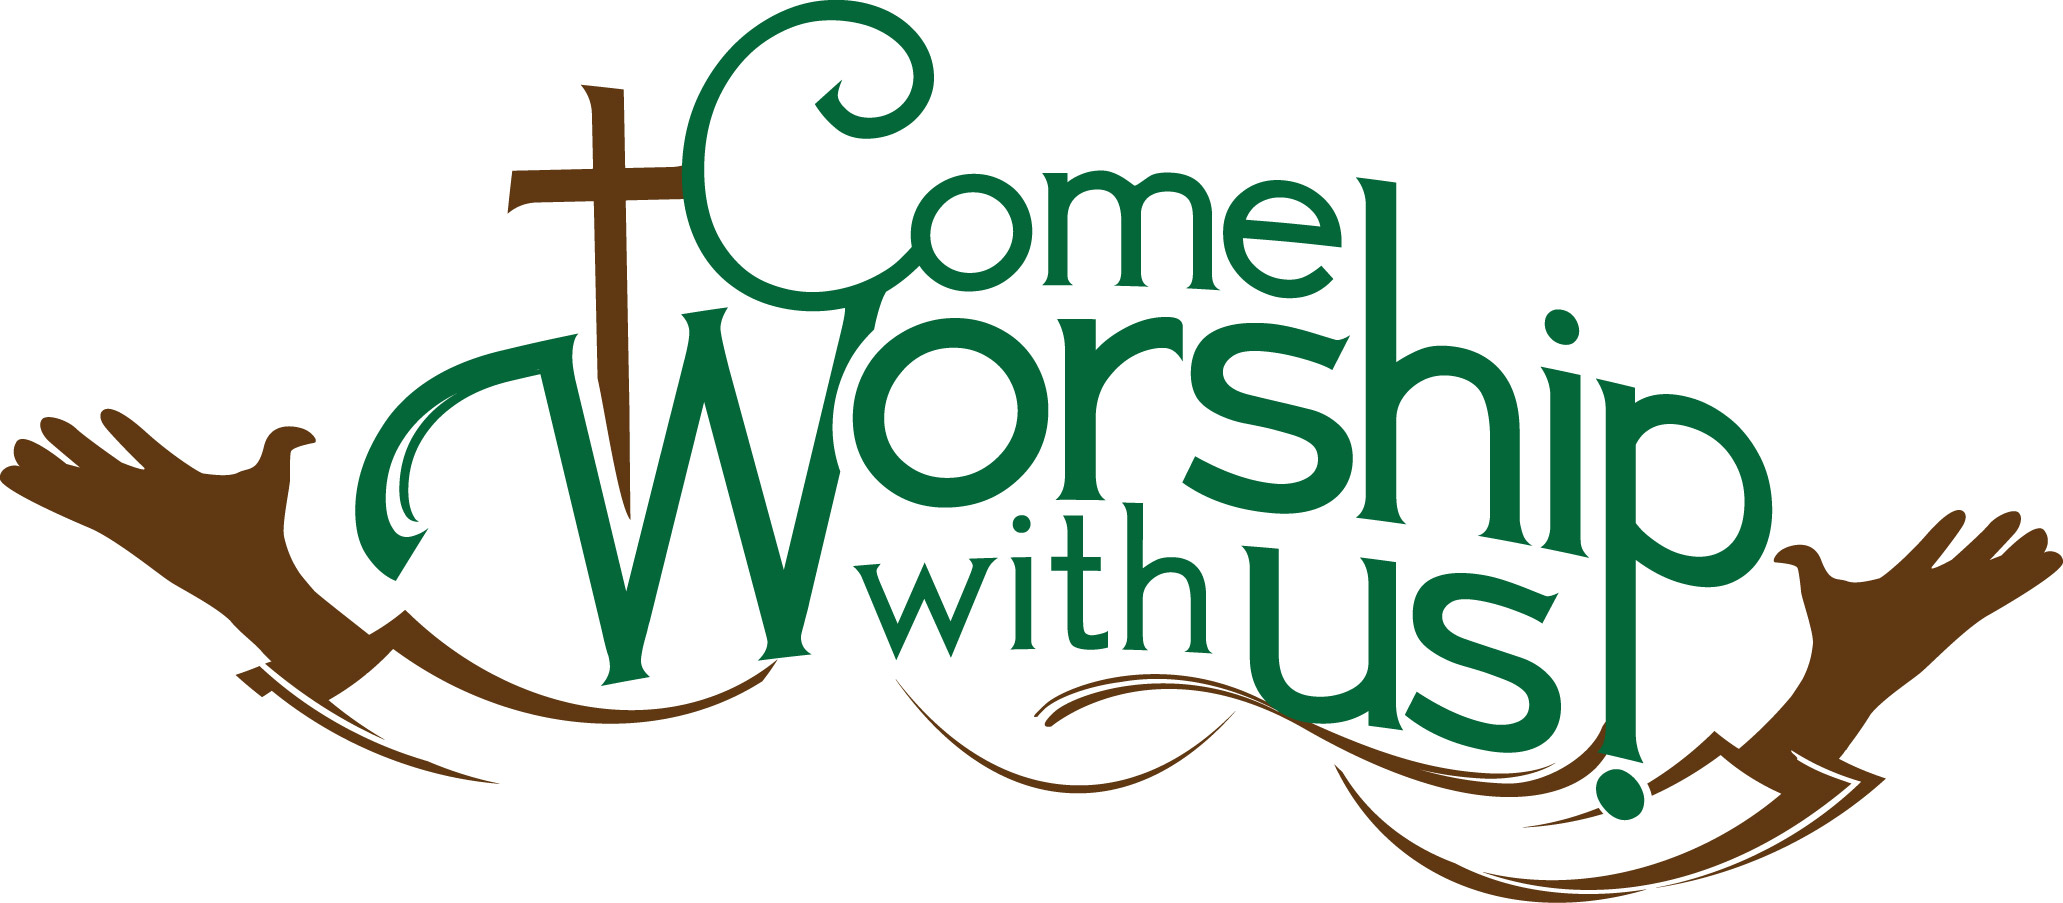 Christian Praise And Worship 